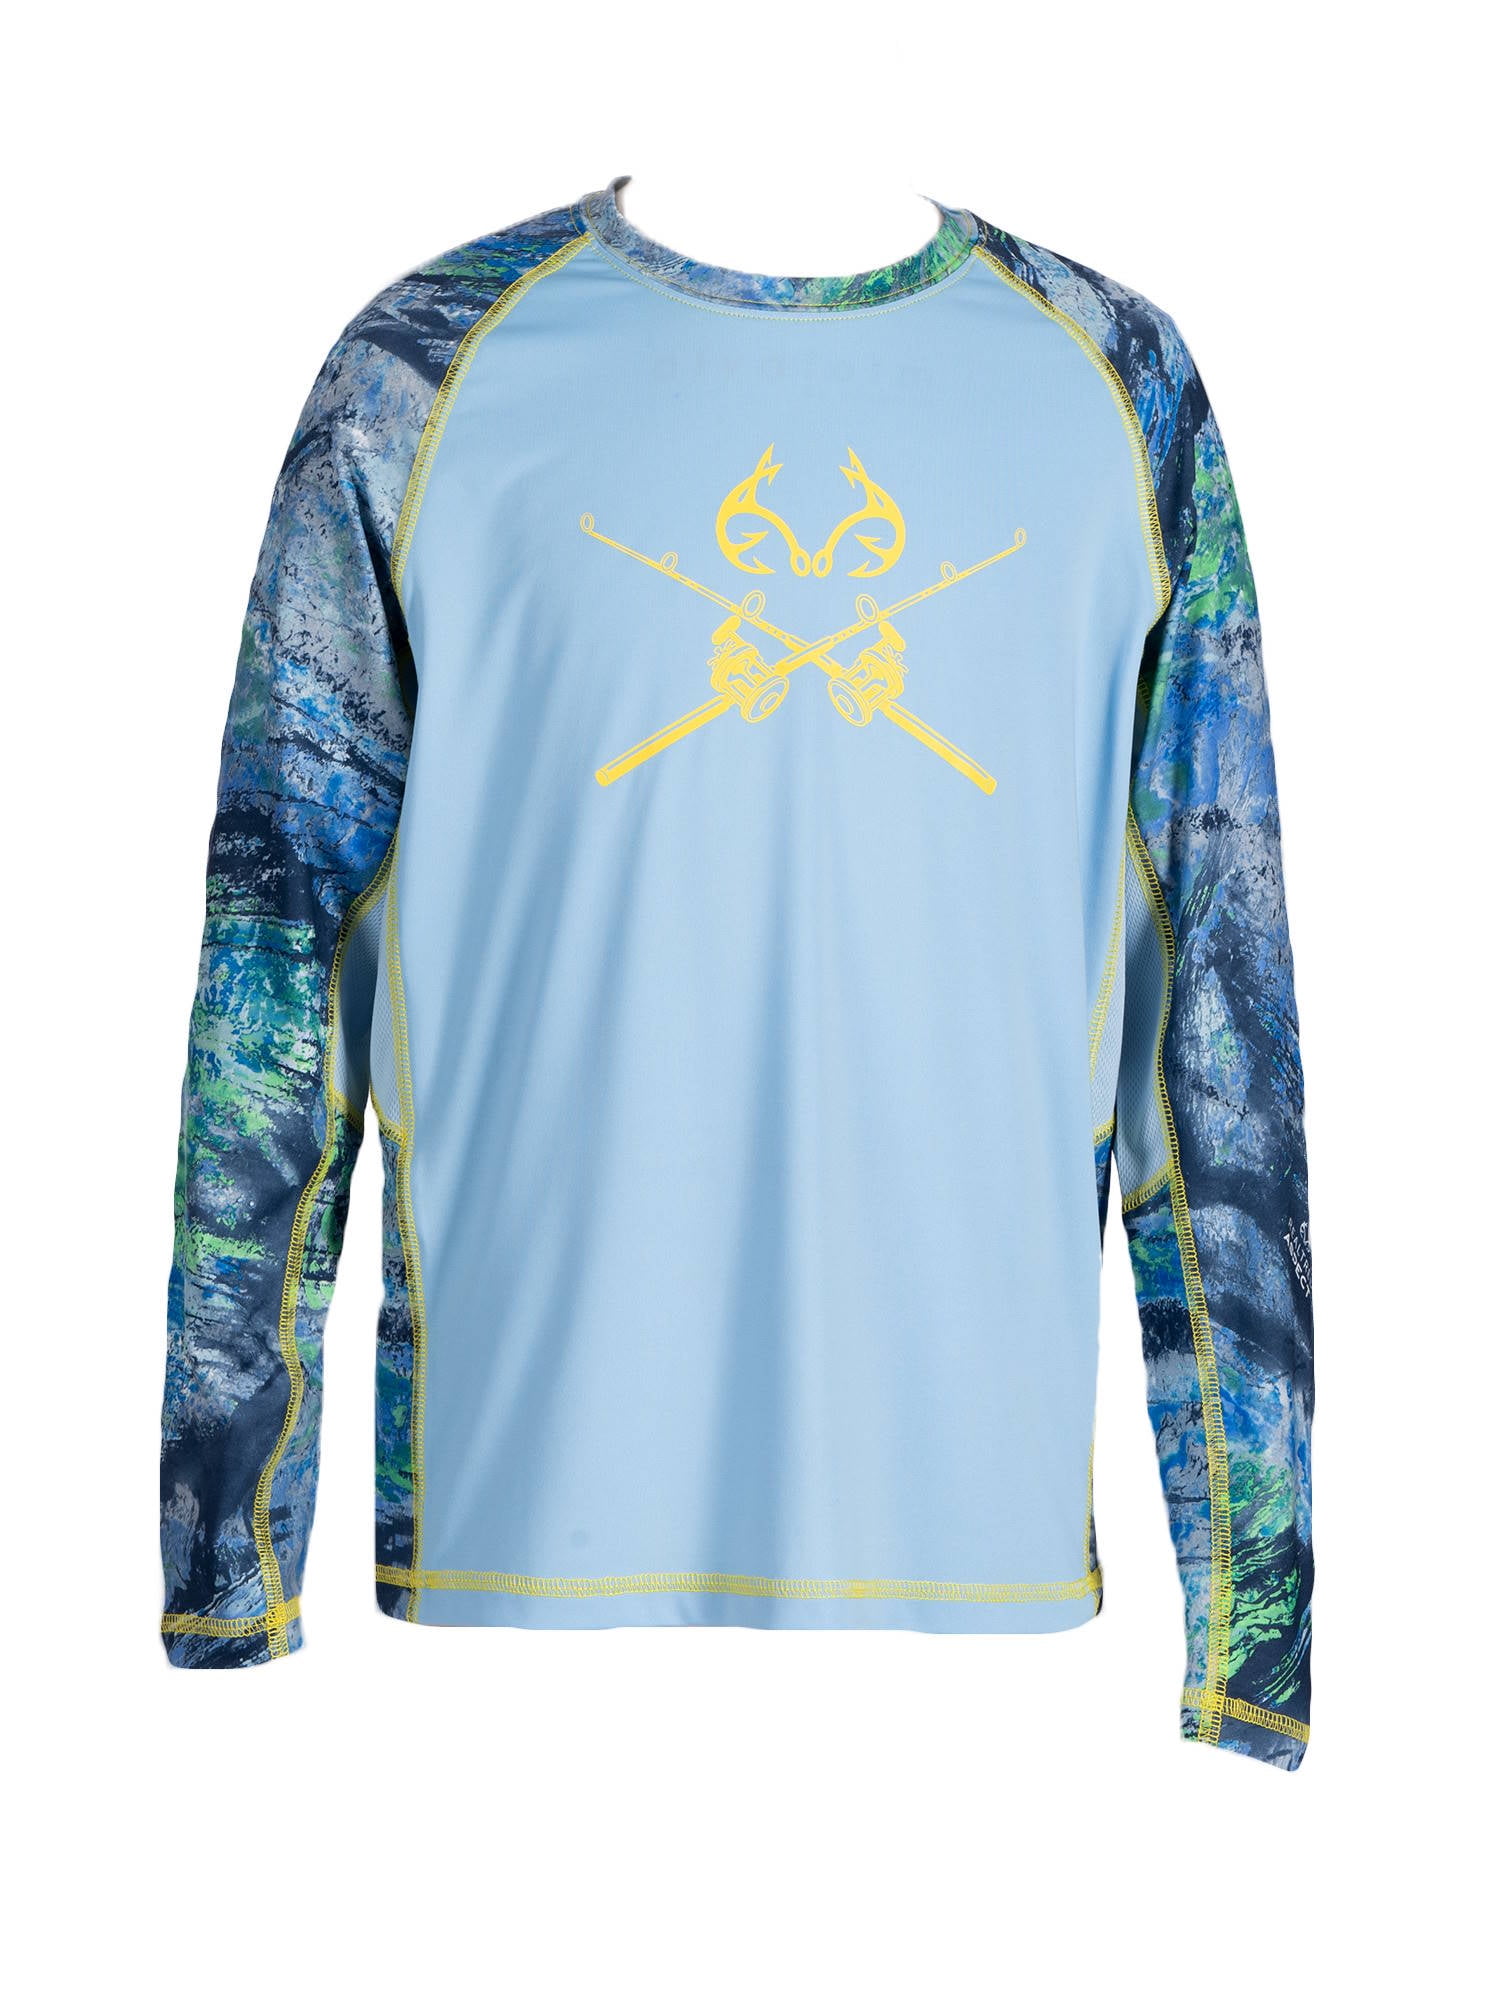 Realtree Kid's Long Sleeve Fishing Tee, Youth Performance Shirt in RT  Aspect Windsurf, Sizes XS-XL 